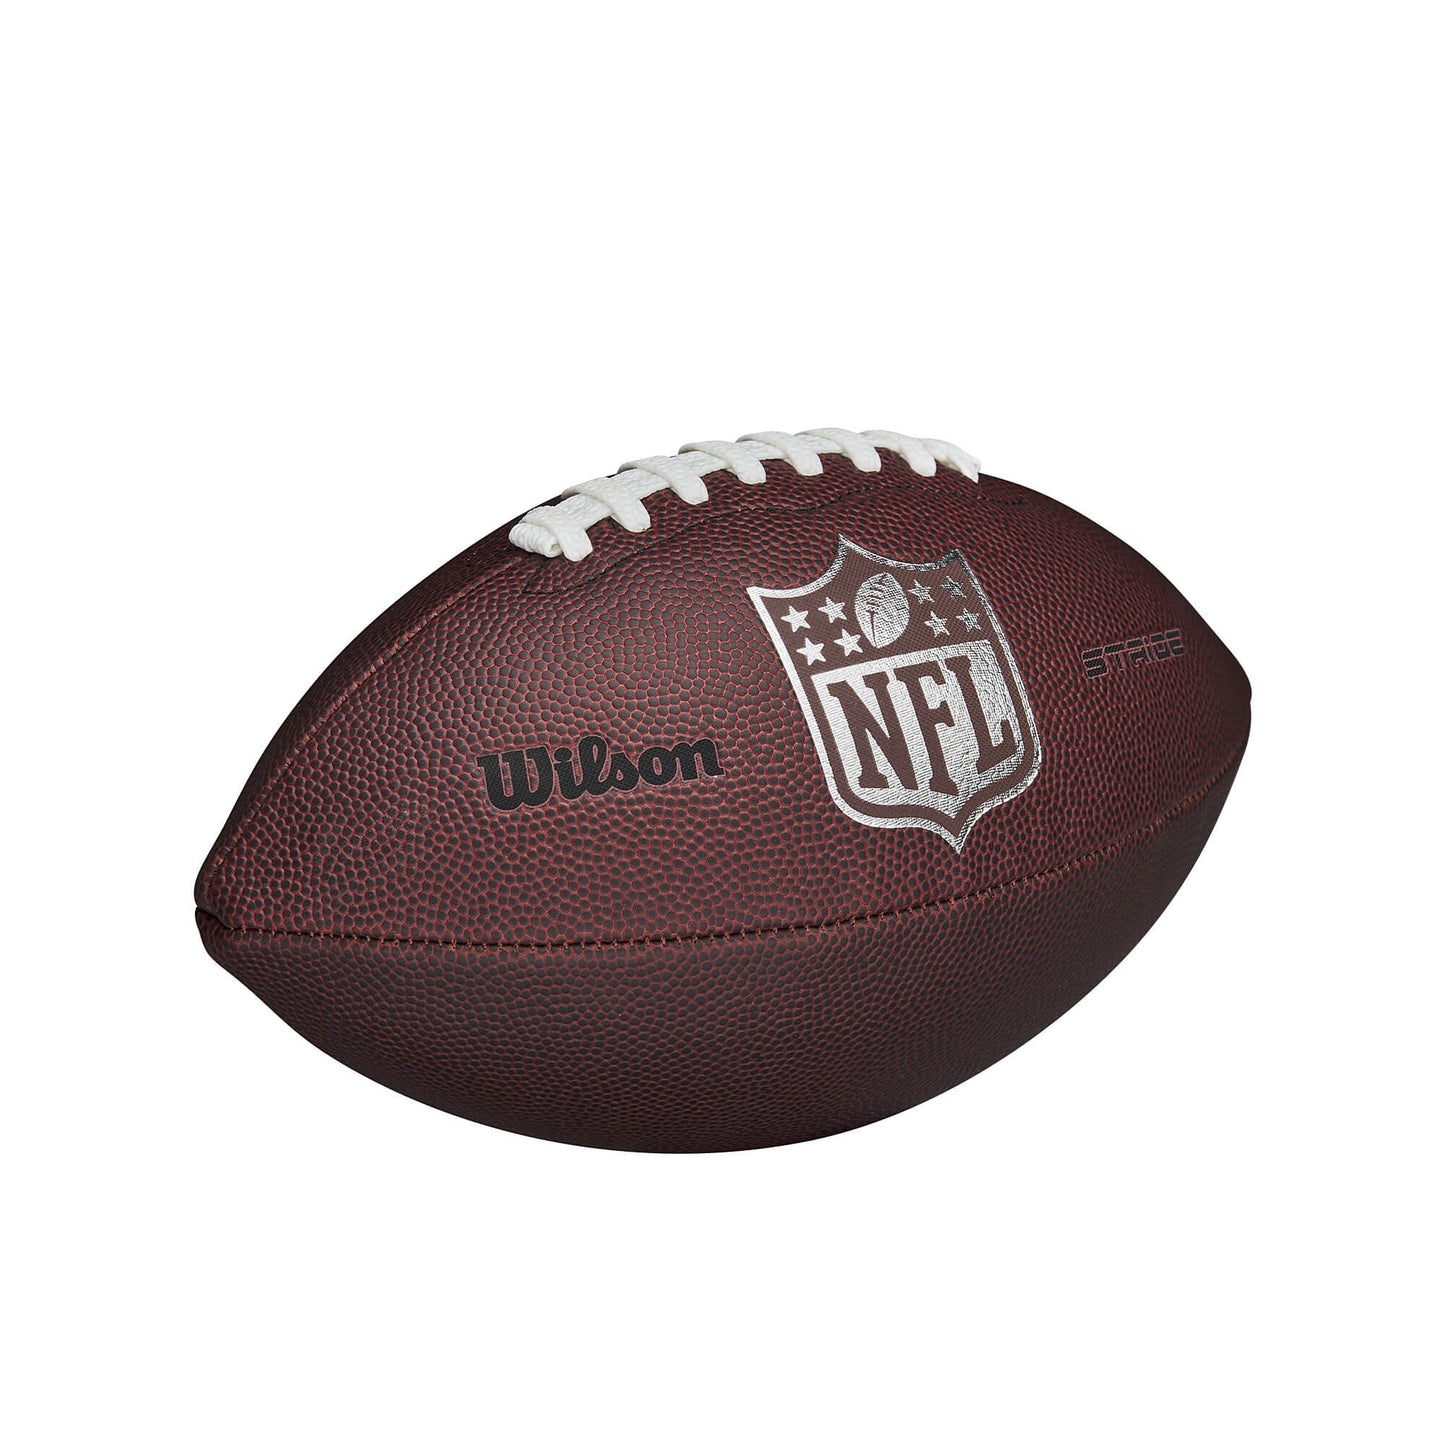 Wilson NFL Stride (sz. Official) Brown